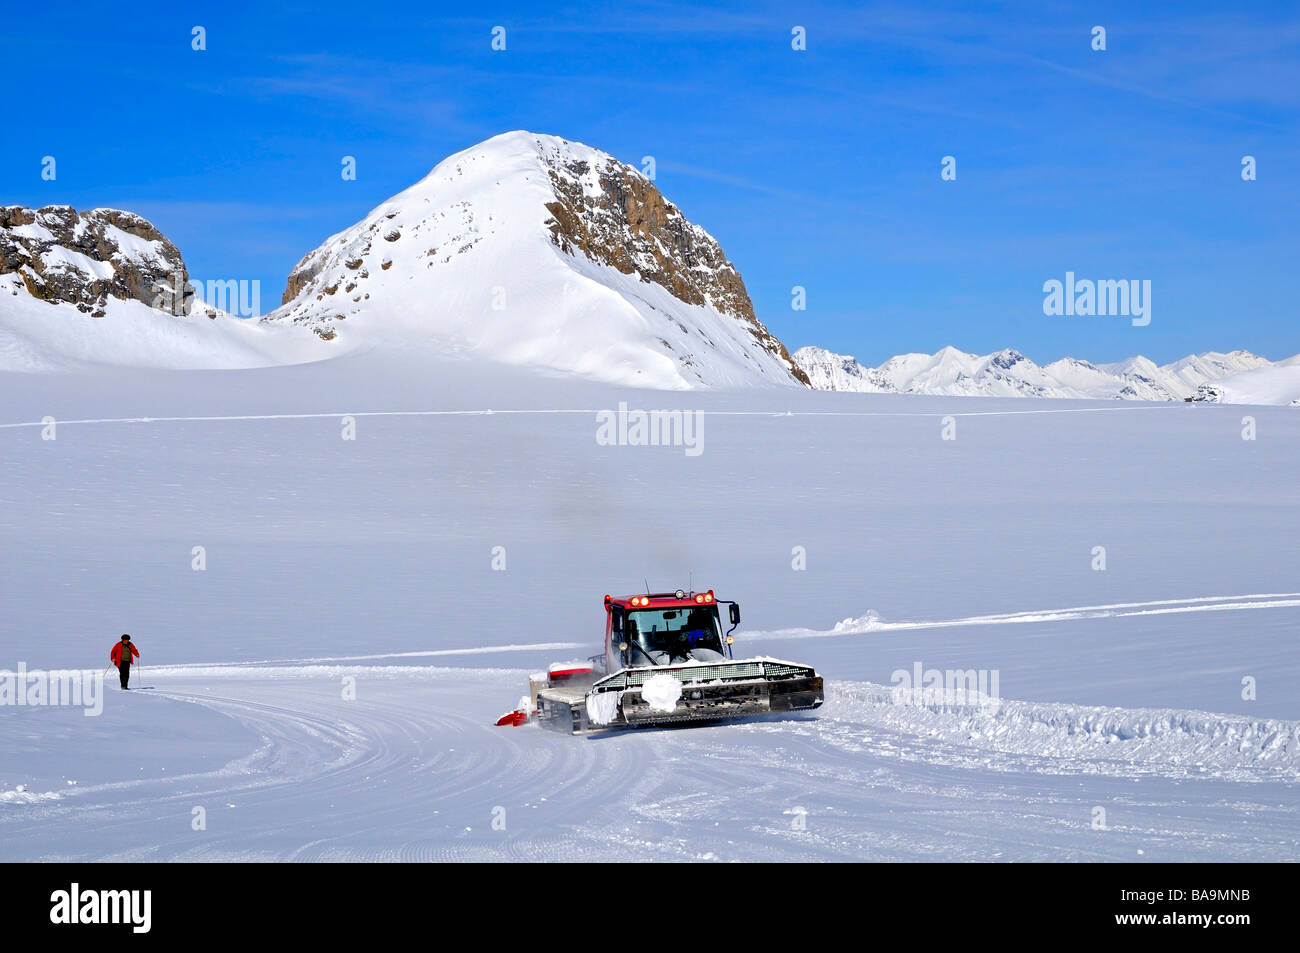 PistenBully Kässbohrer snow processing machine in action on the Plaine Morte glacier, Crans Montana, Switzerland Stock Photo